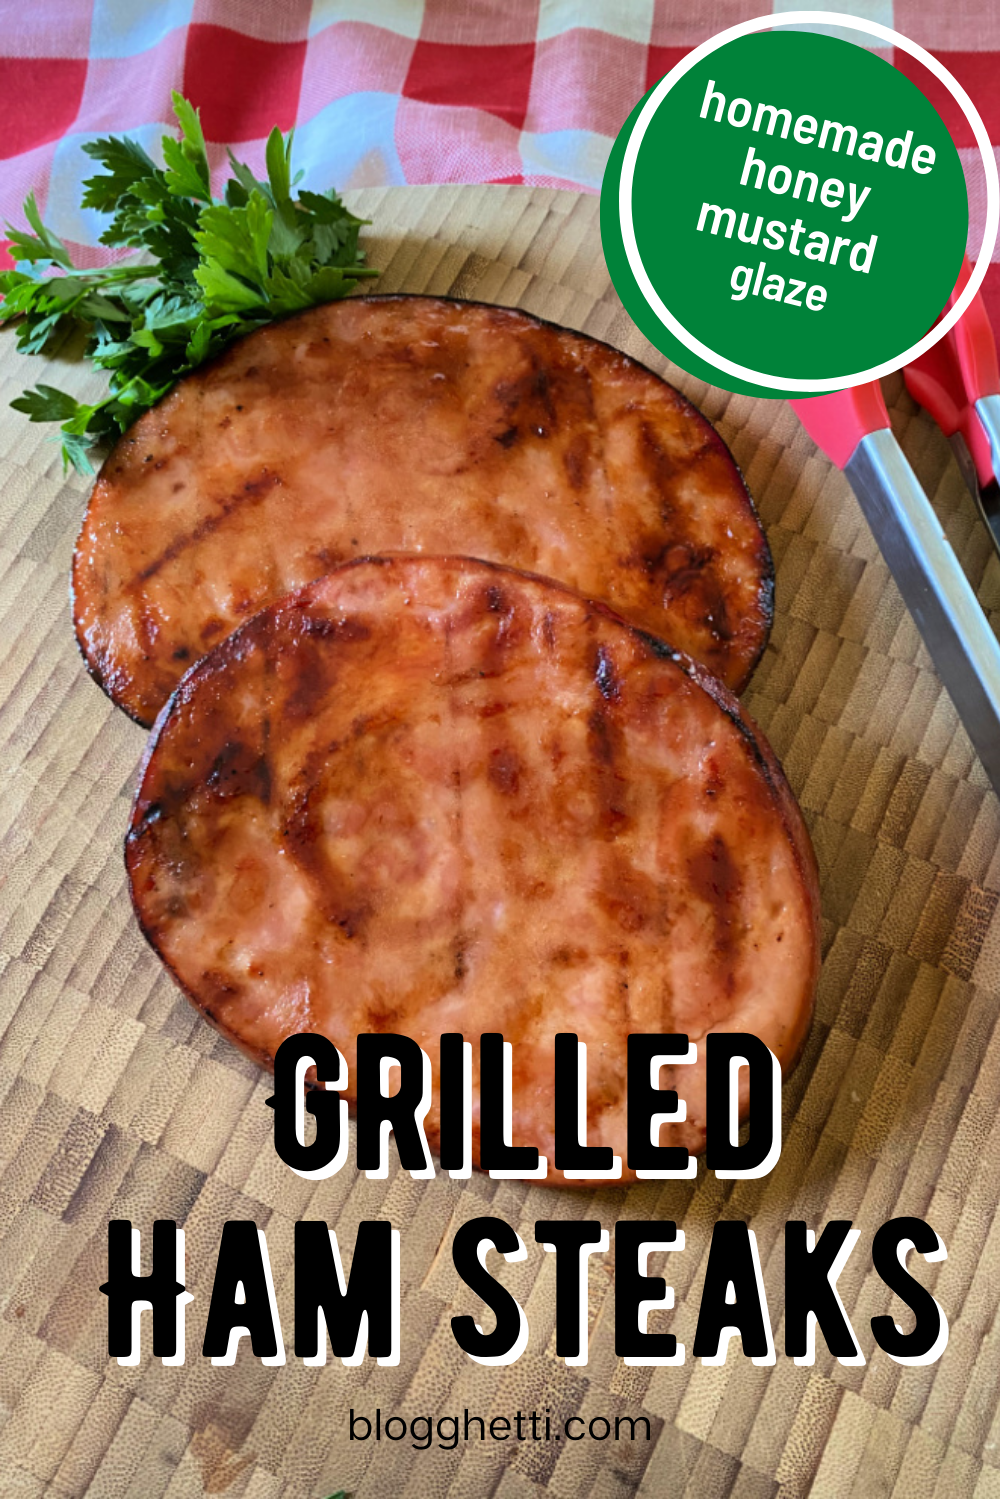 https://blogghetti.com/wp-content/uploads/2021/05/grilled-ham-steaks-with-honey-mustard-glaze-pinterest-image.png